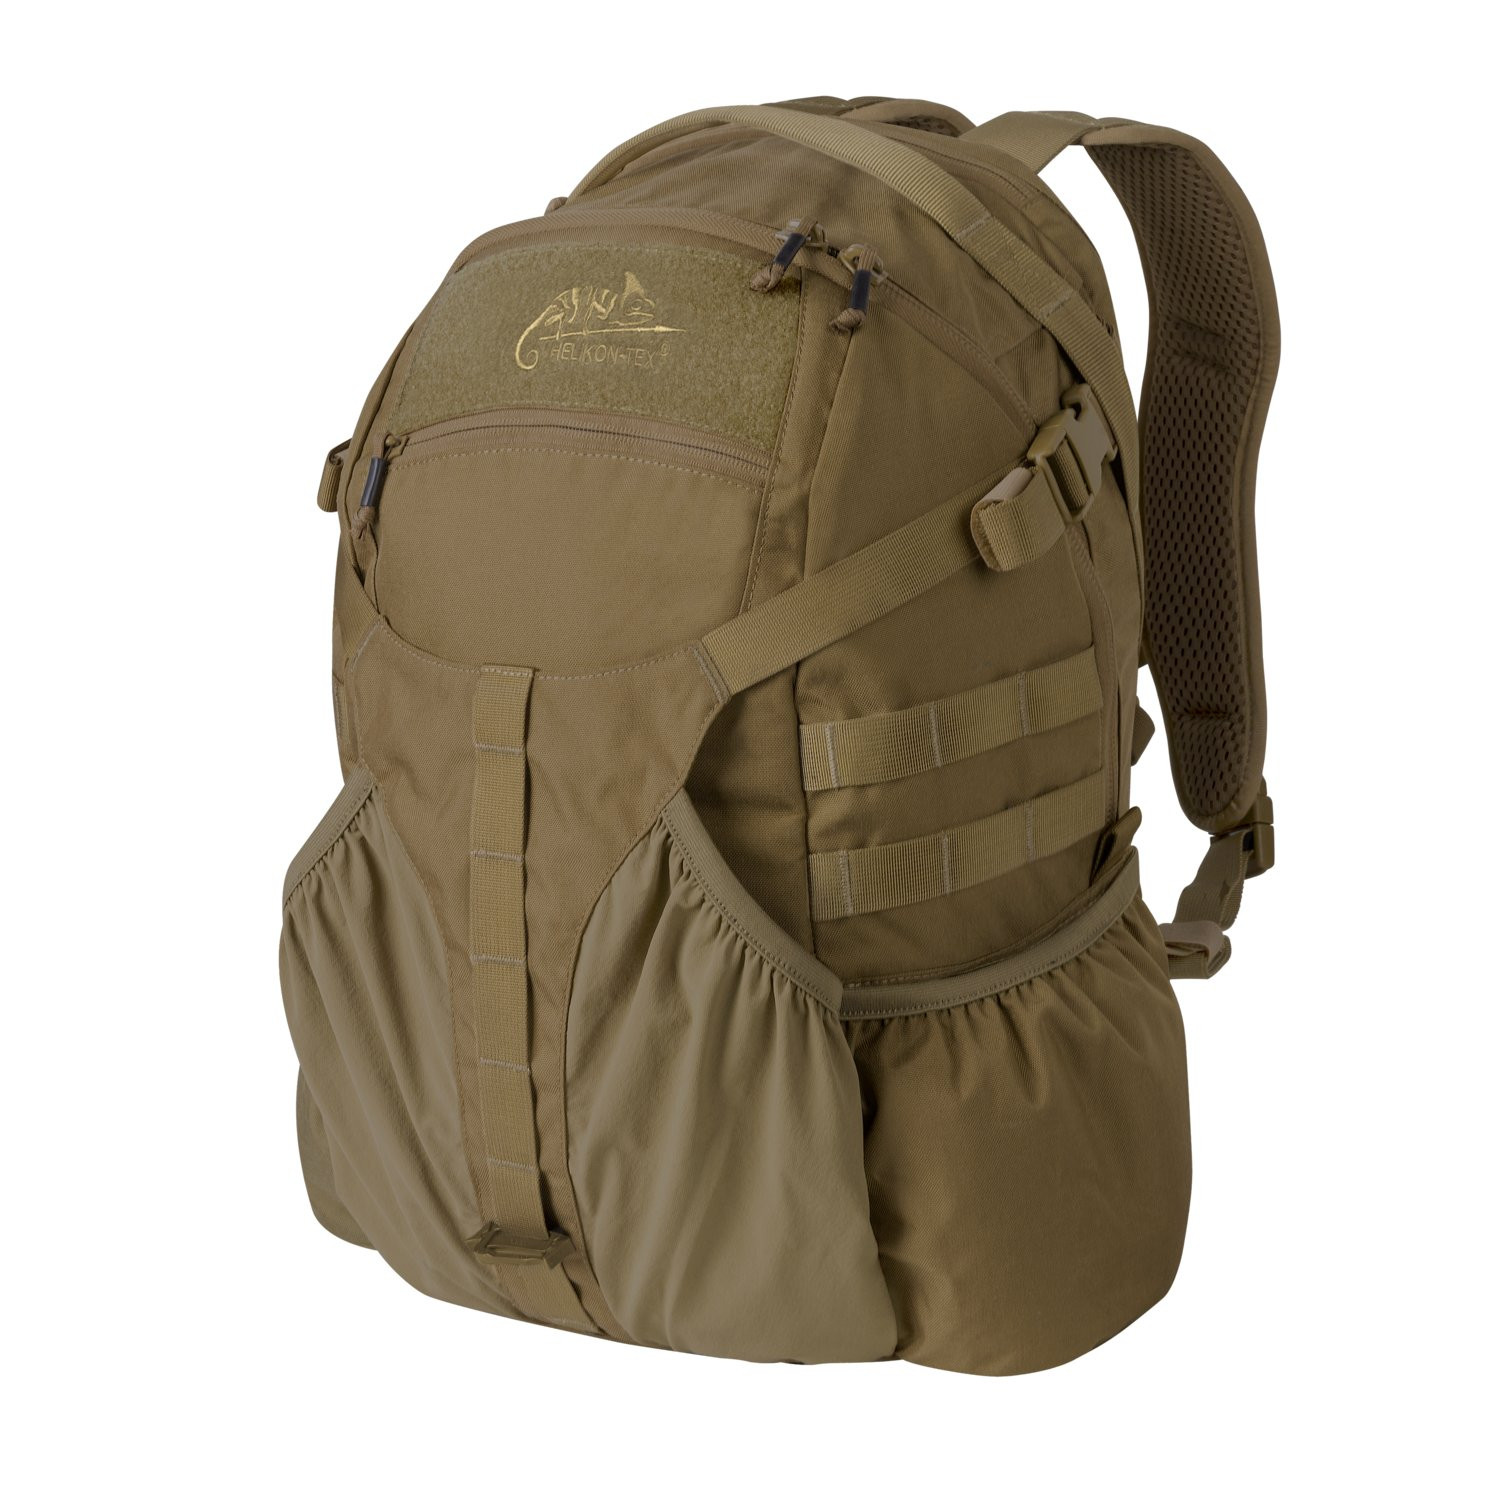 1 Person Elite Survival Kit w/ Multi-Pocket Hikers Backpack